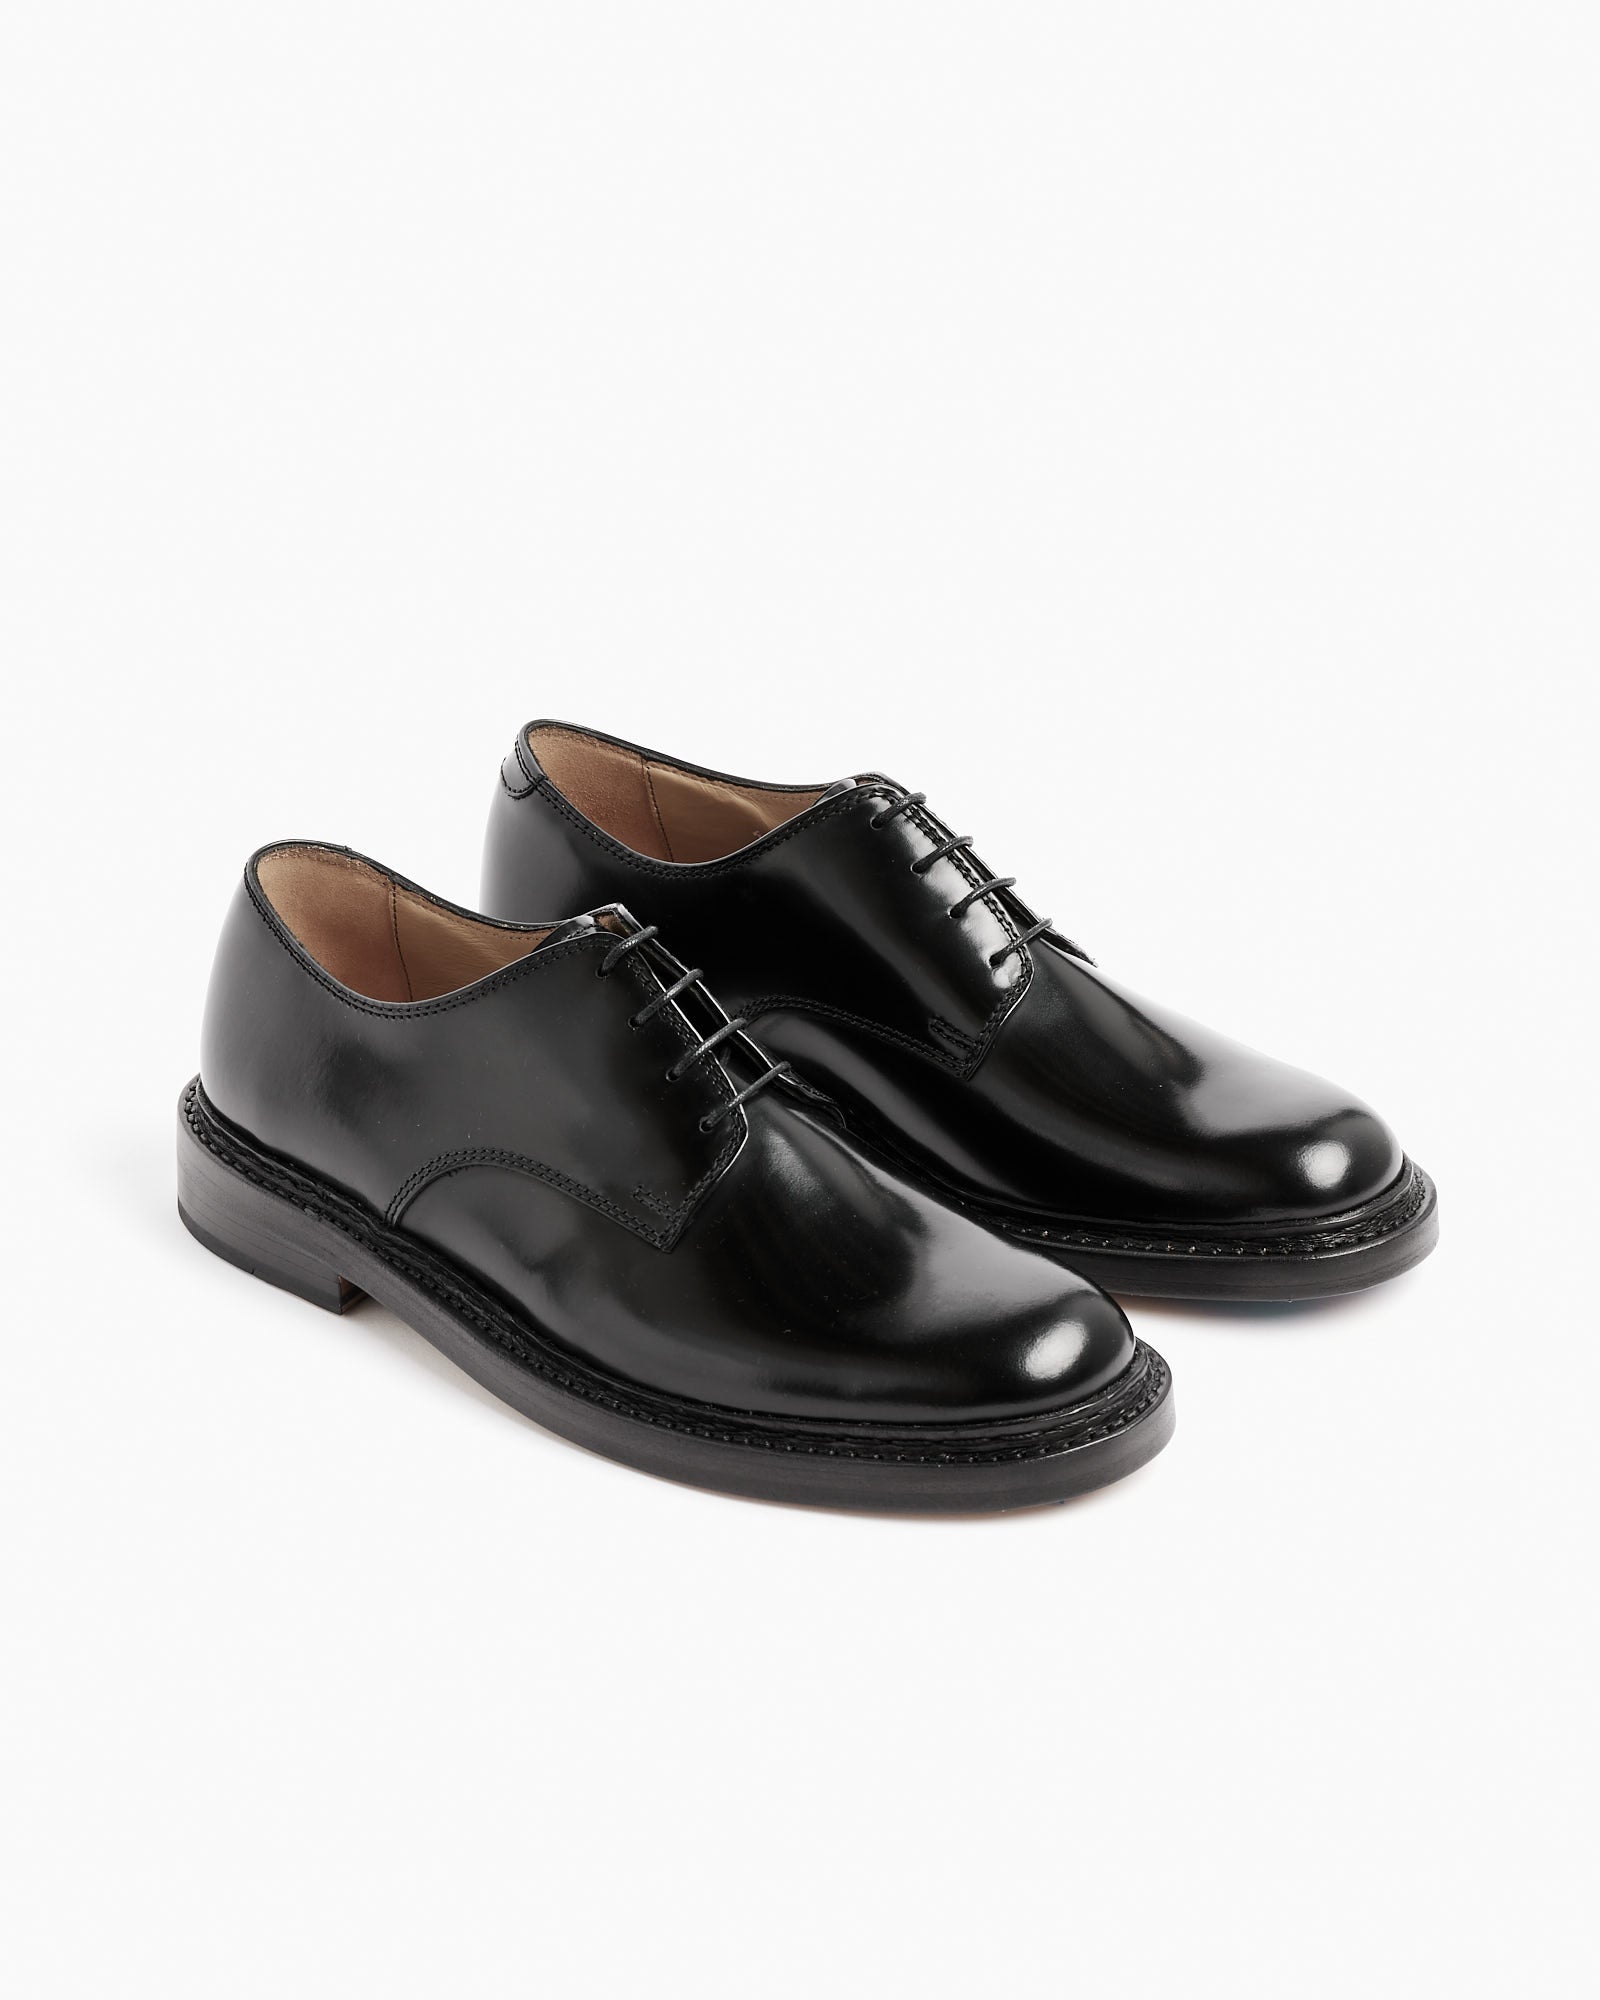 Uniform Parade Shoes in Black – Mohawk General Store